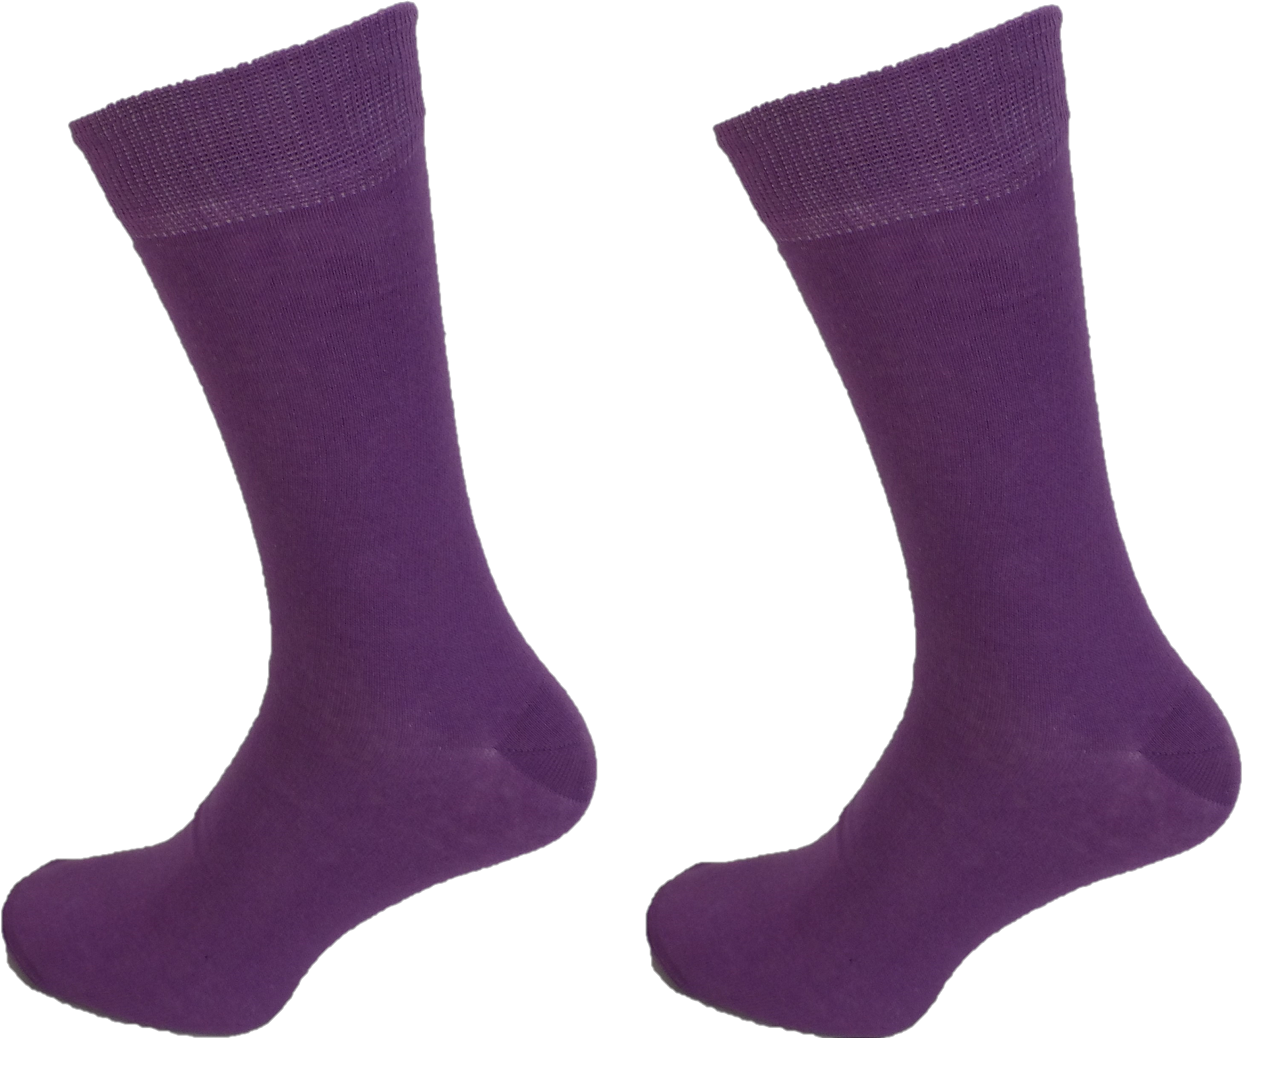 Mens 2 Pair Pack Lilac Mod Retro Socks